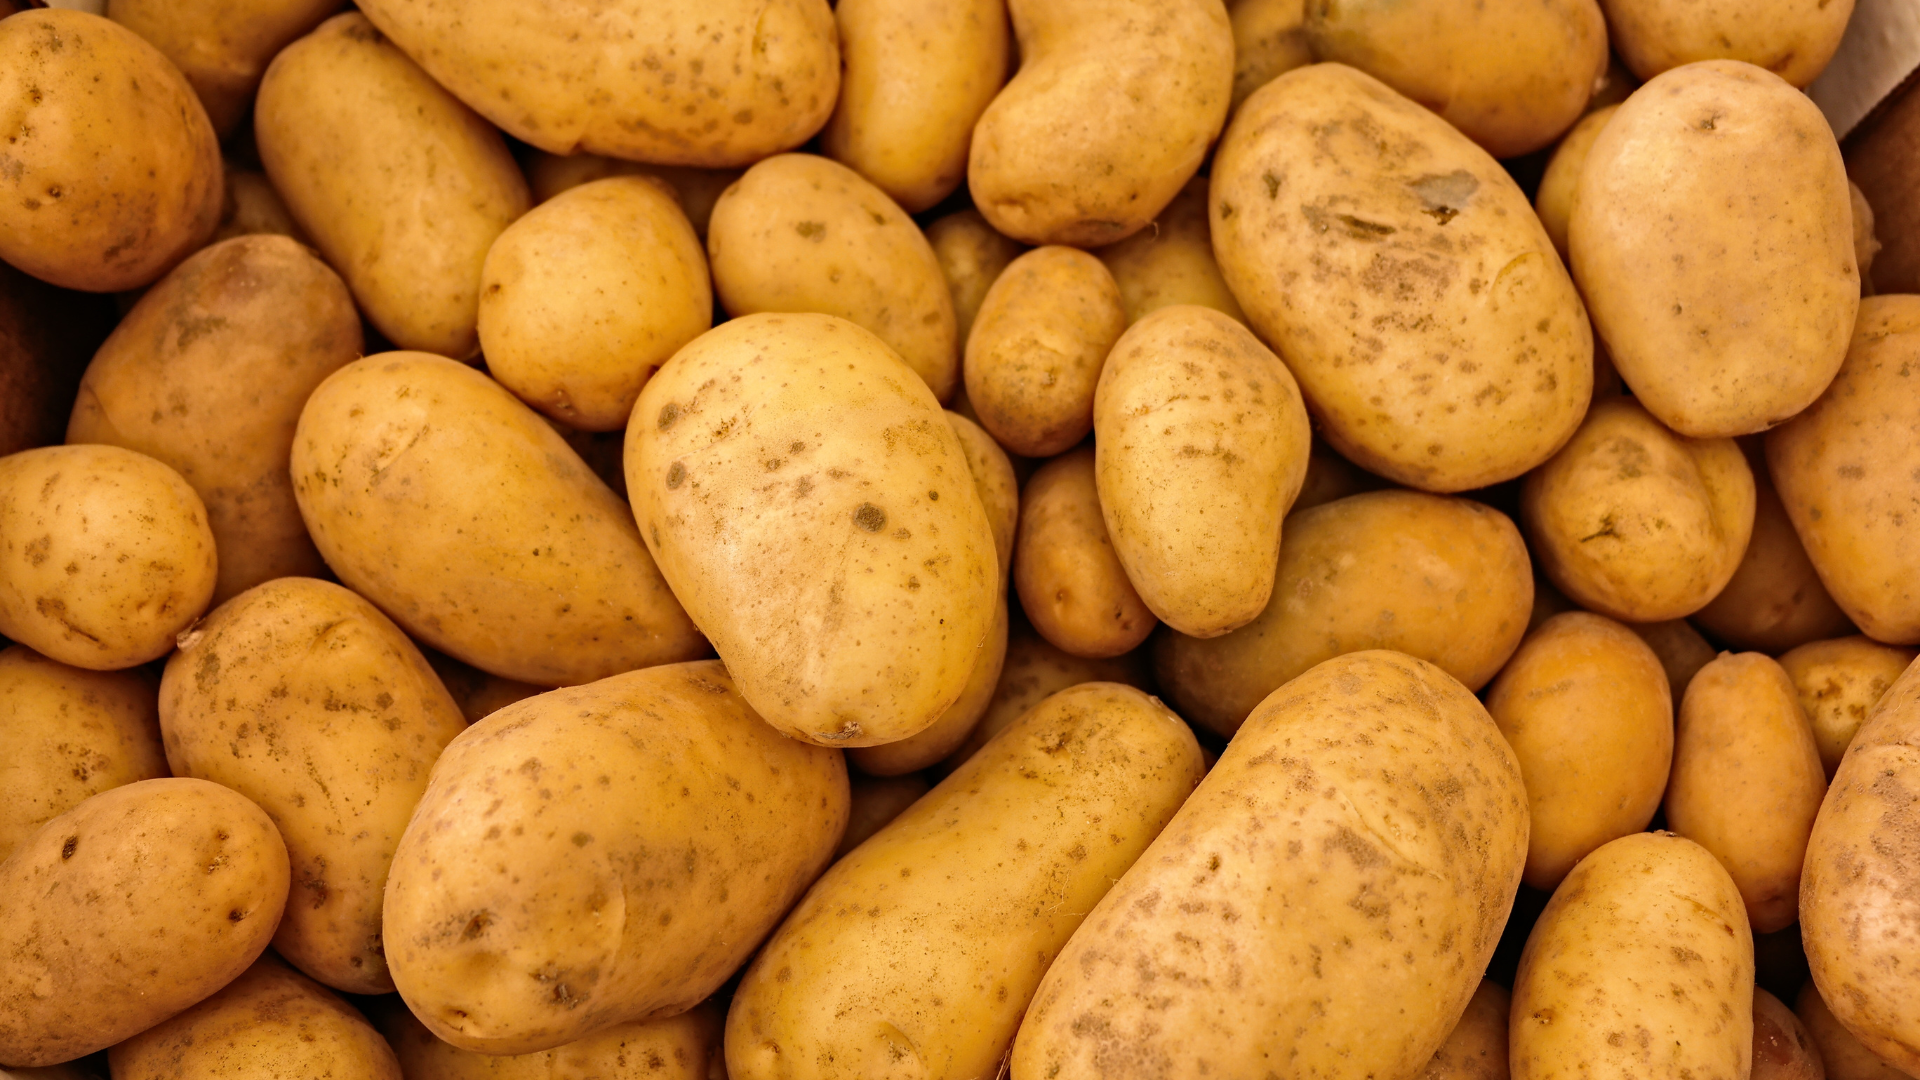 Motivos para cosumir batatas